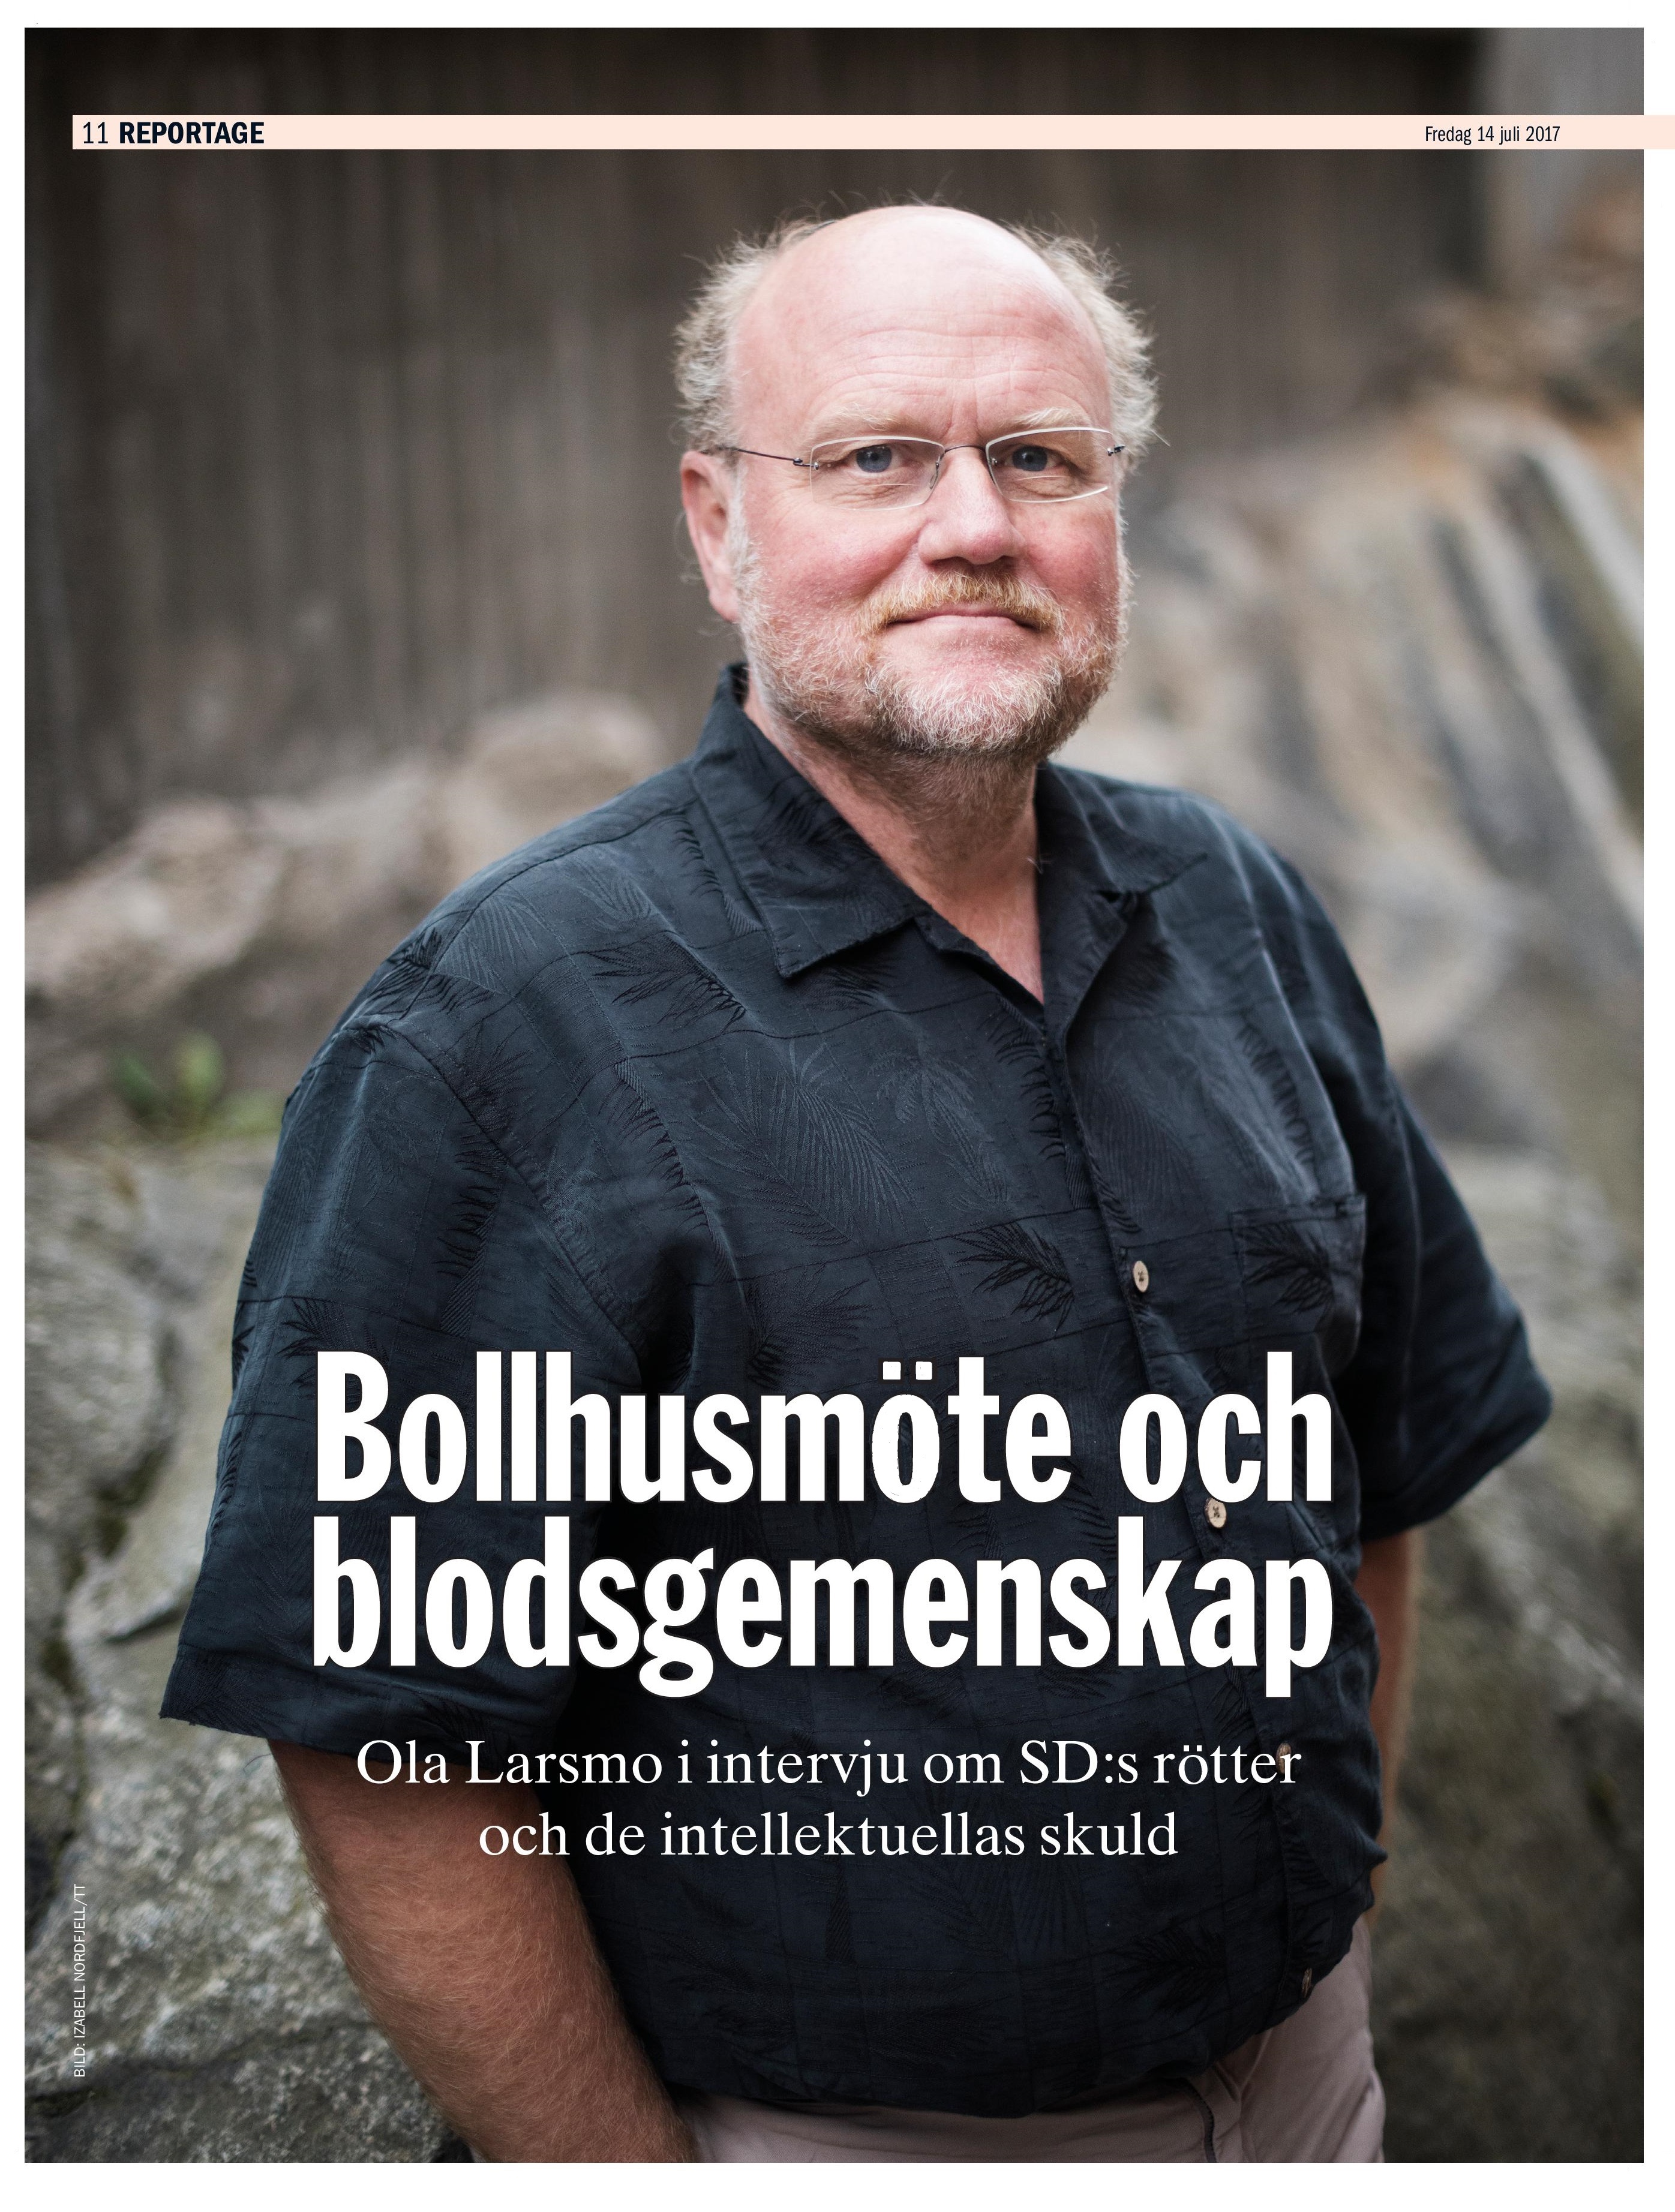 Ola Larsmo, ETC Uppsala 2017-07-14